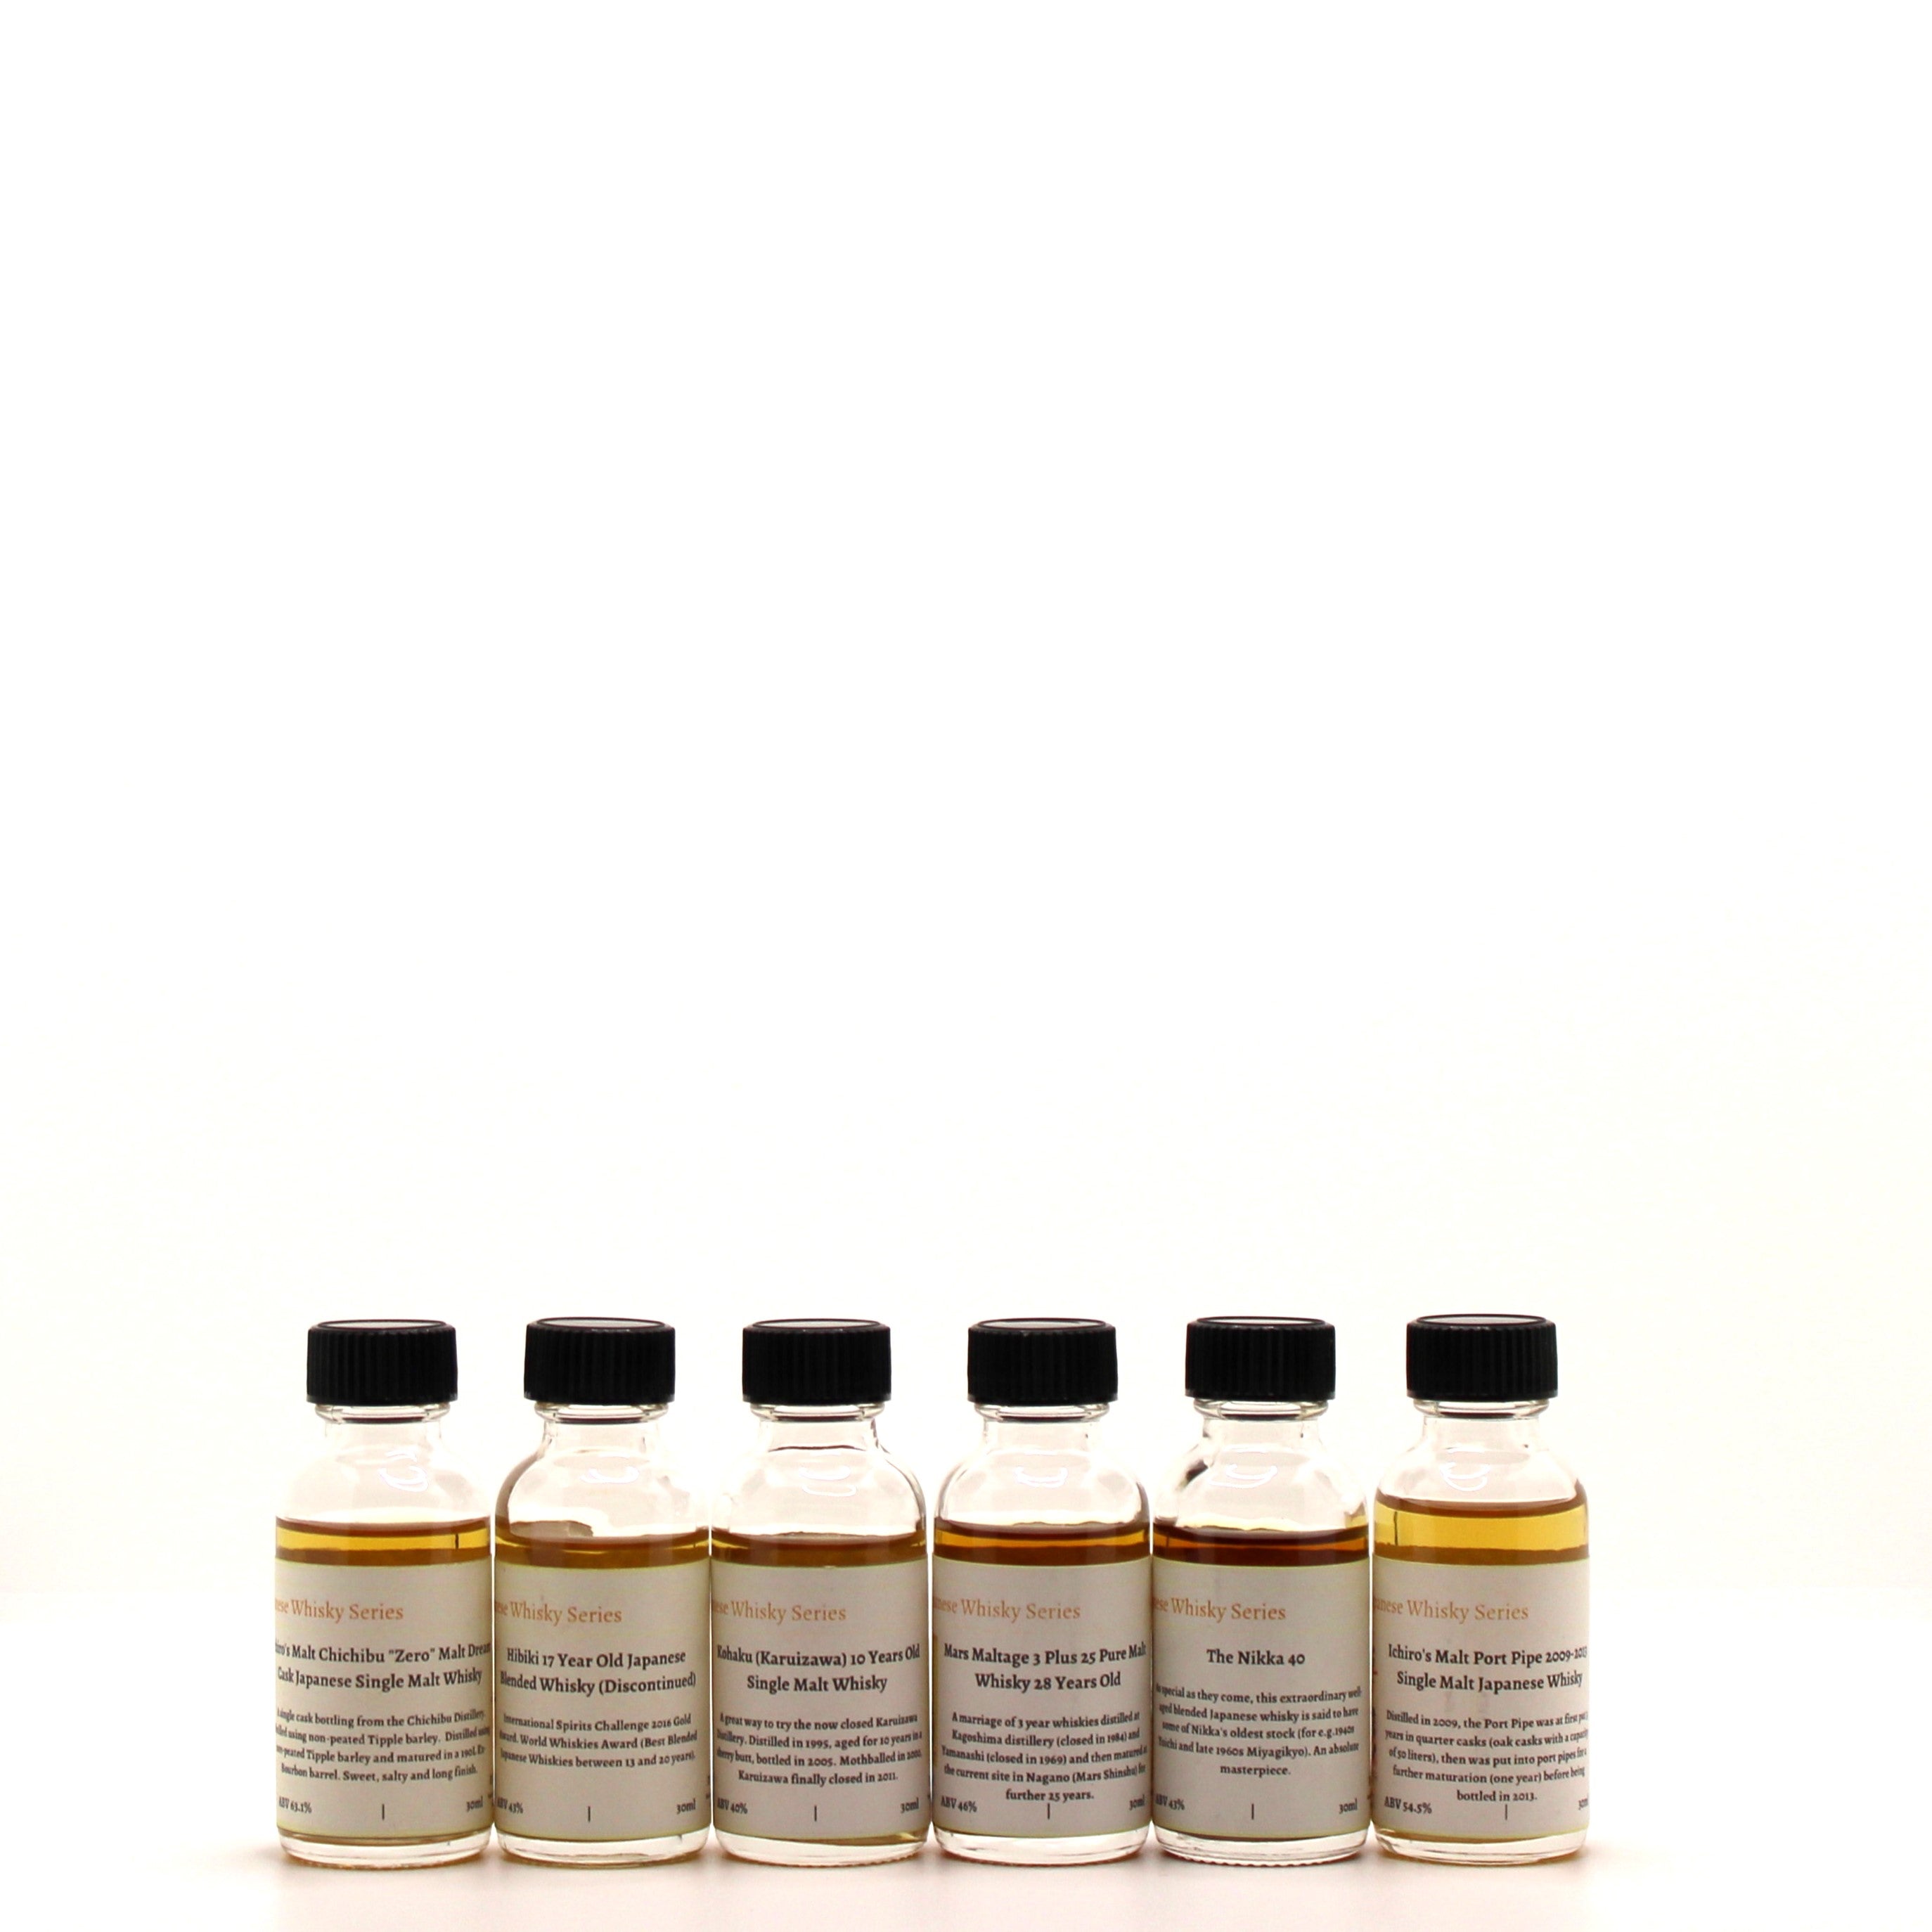 Fine & Rare Japanese Single Malt Whisky (6 x 30 ml) Tasting Set with Gift Box